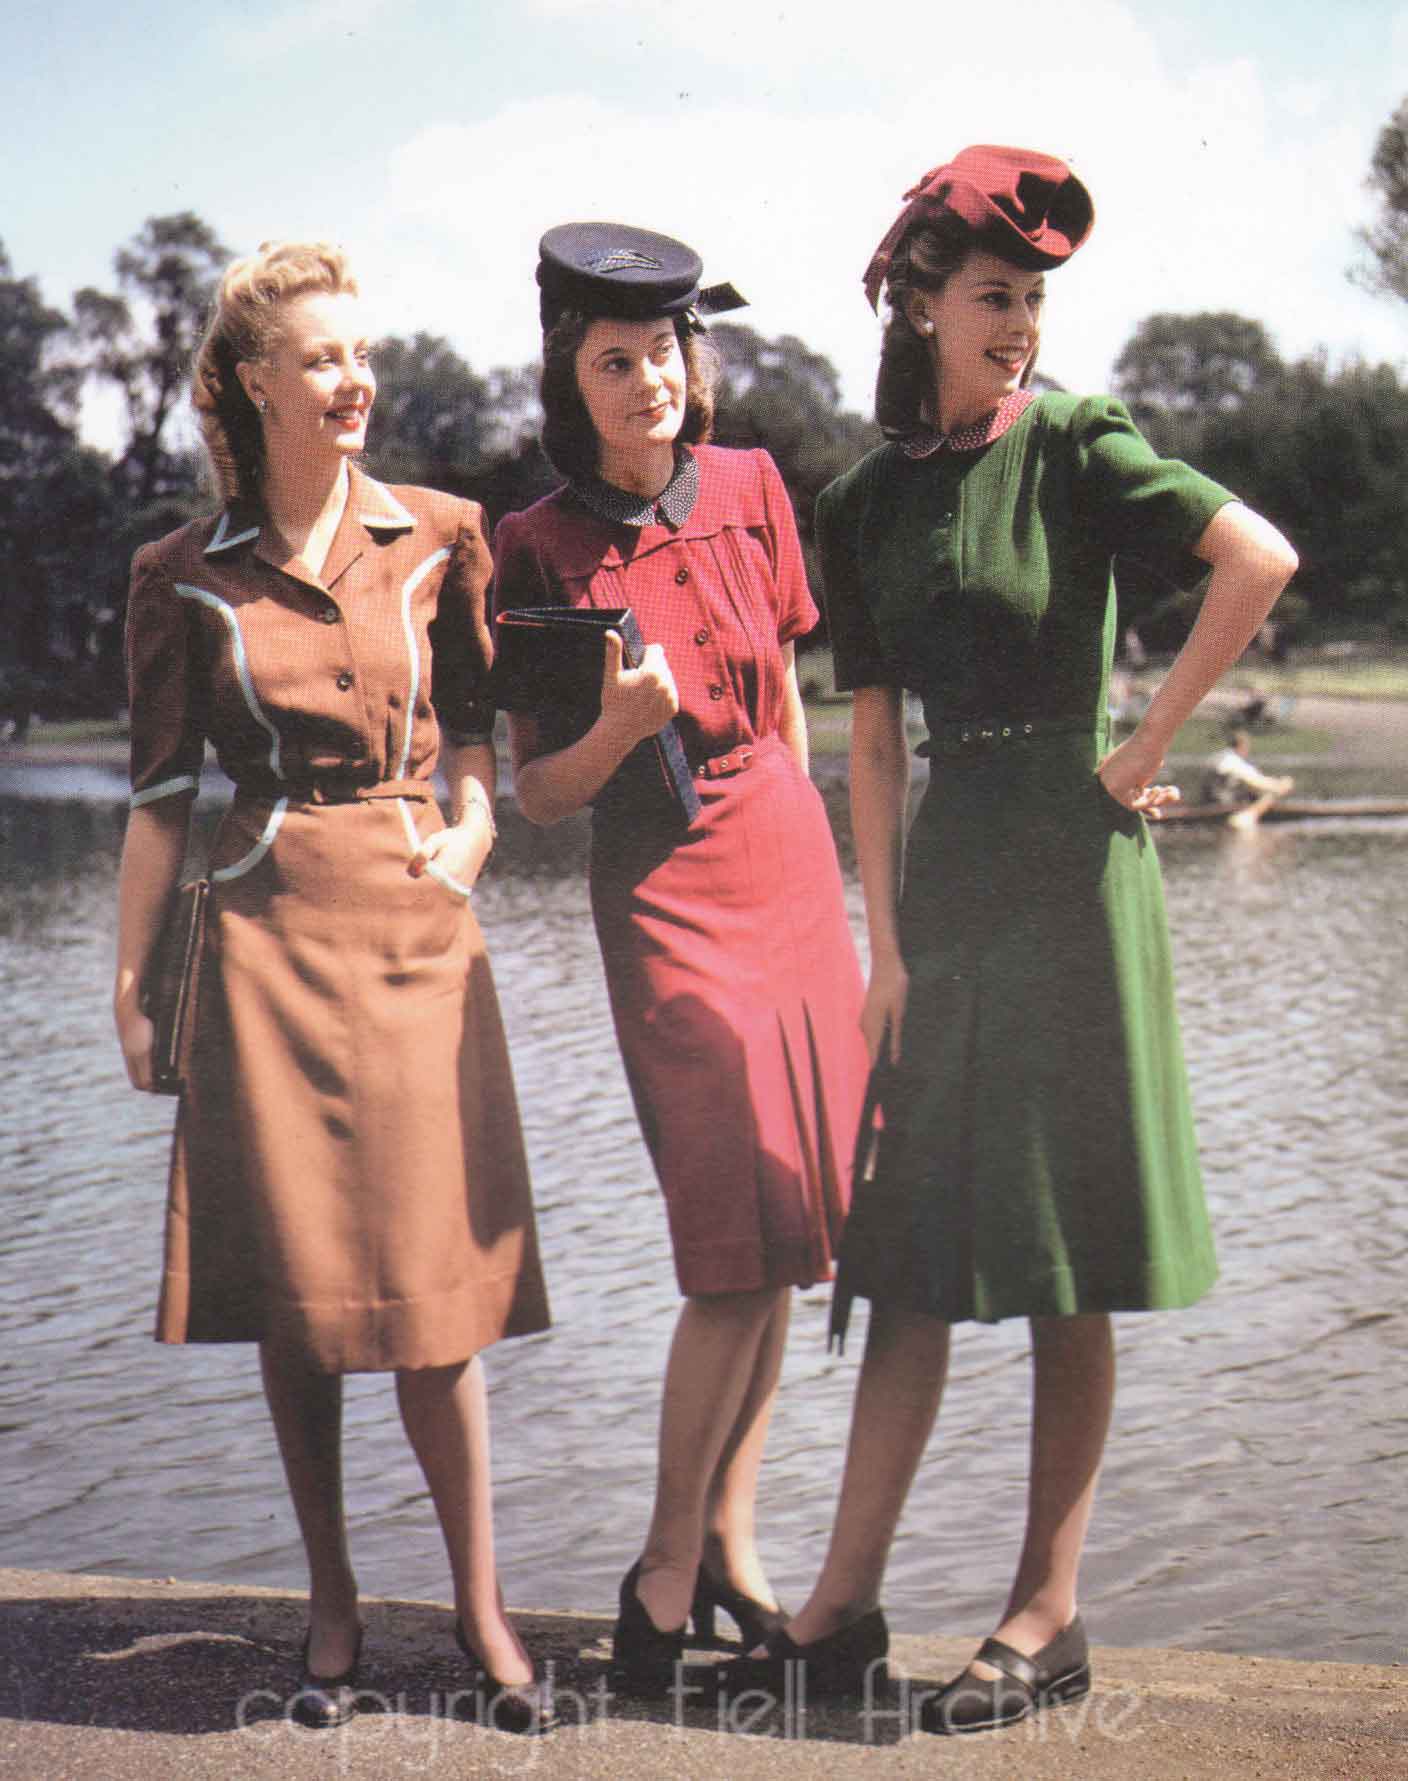 1940 s dress styles